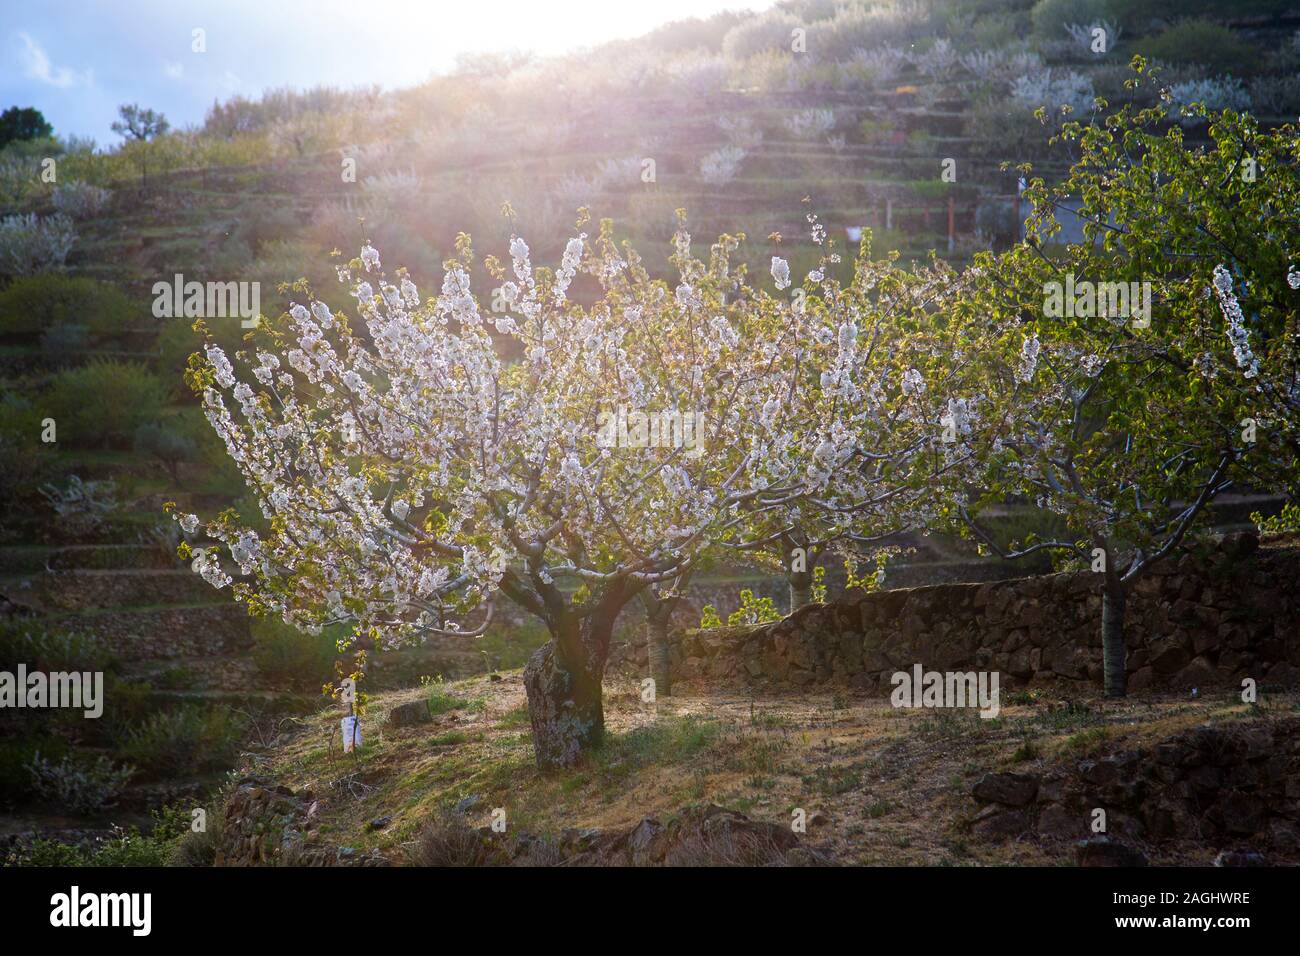 Cherry trees in bloom. Jerte valley, Extremadura, Spain Stock Photo